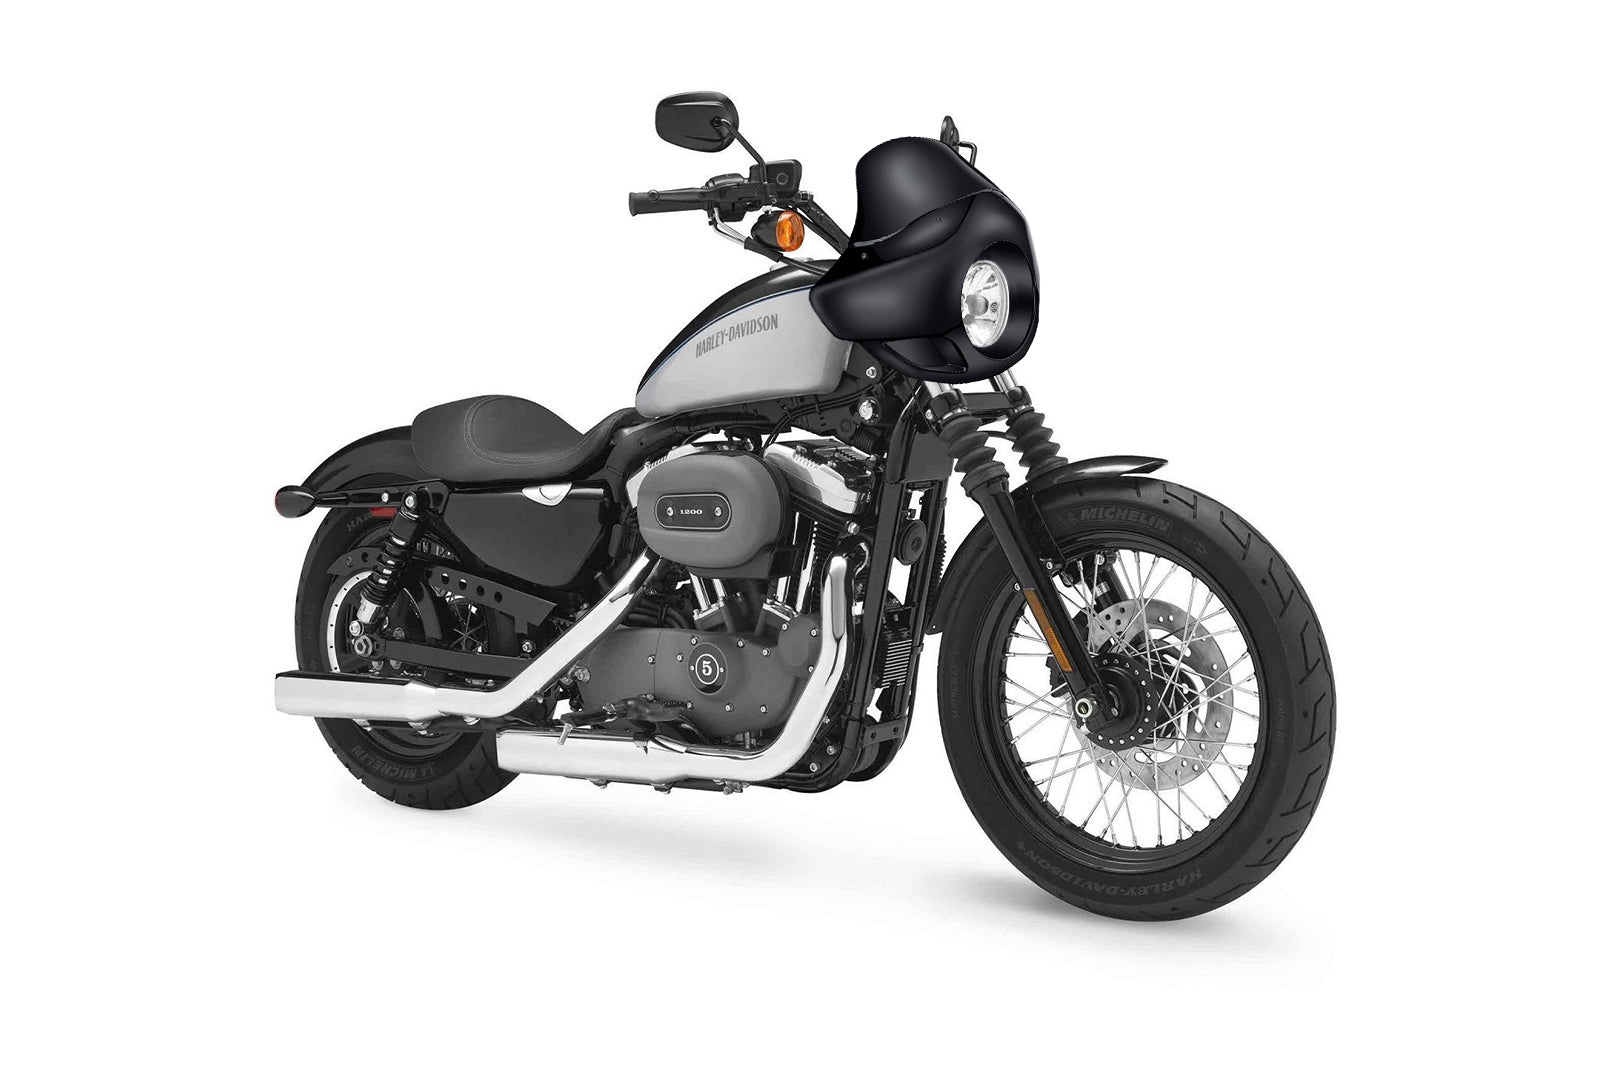 Viking Derby Motorcycle Fairing For Harley Sportster 1200 Nightster XL1200N Gloss Black Bag on Bike View @expand